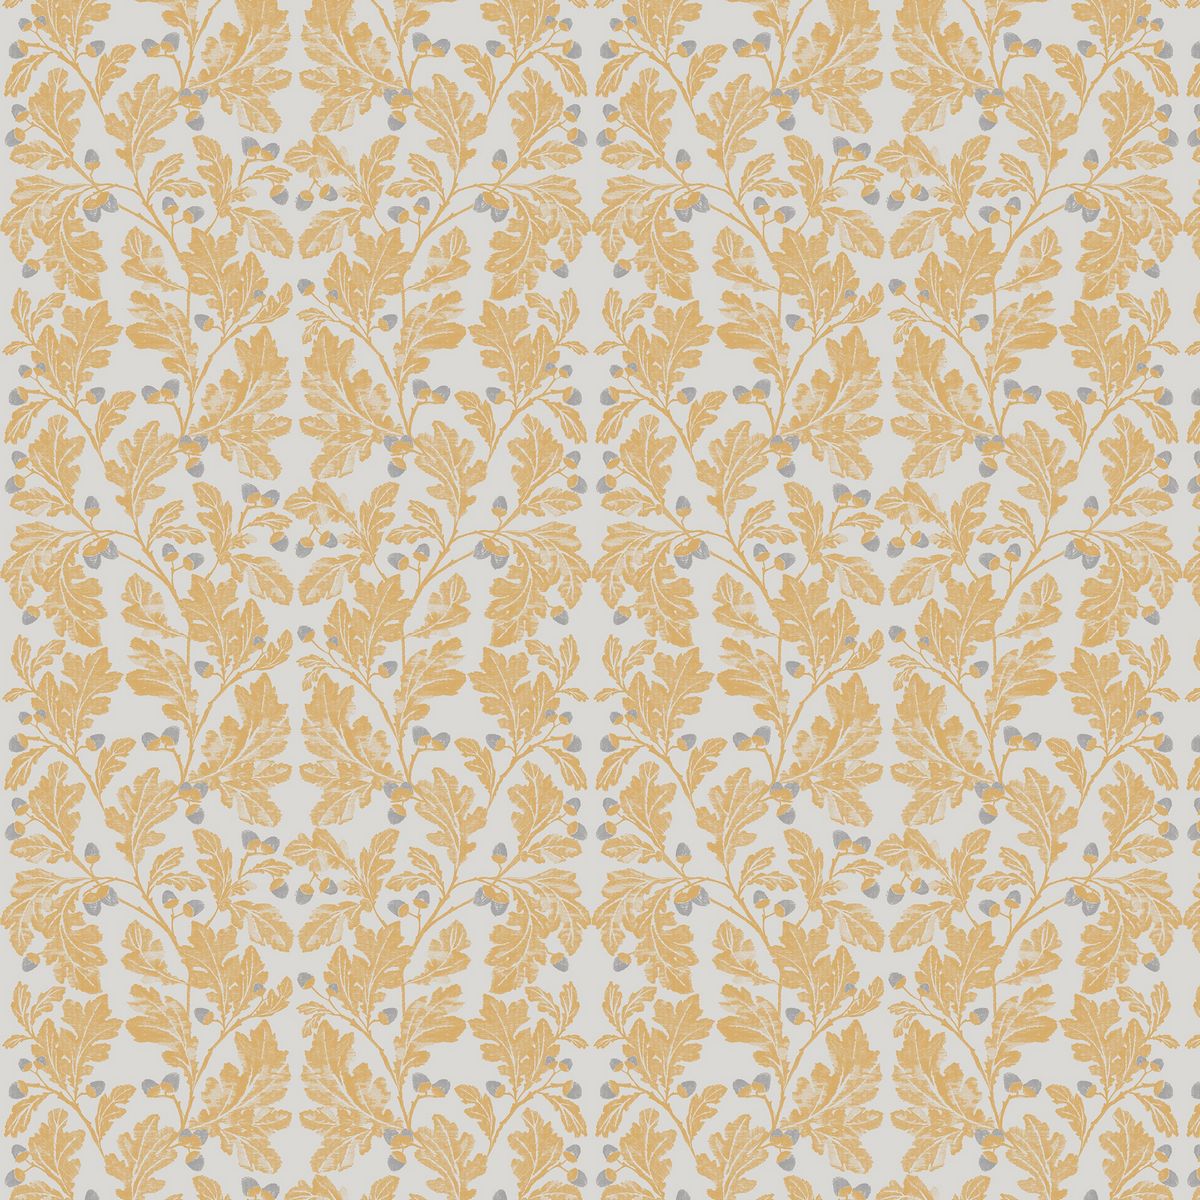 Dunrobin Mustard Fabric by Voyage Maison